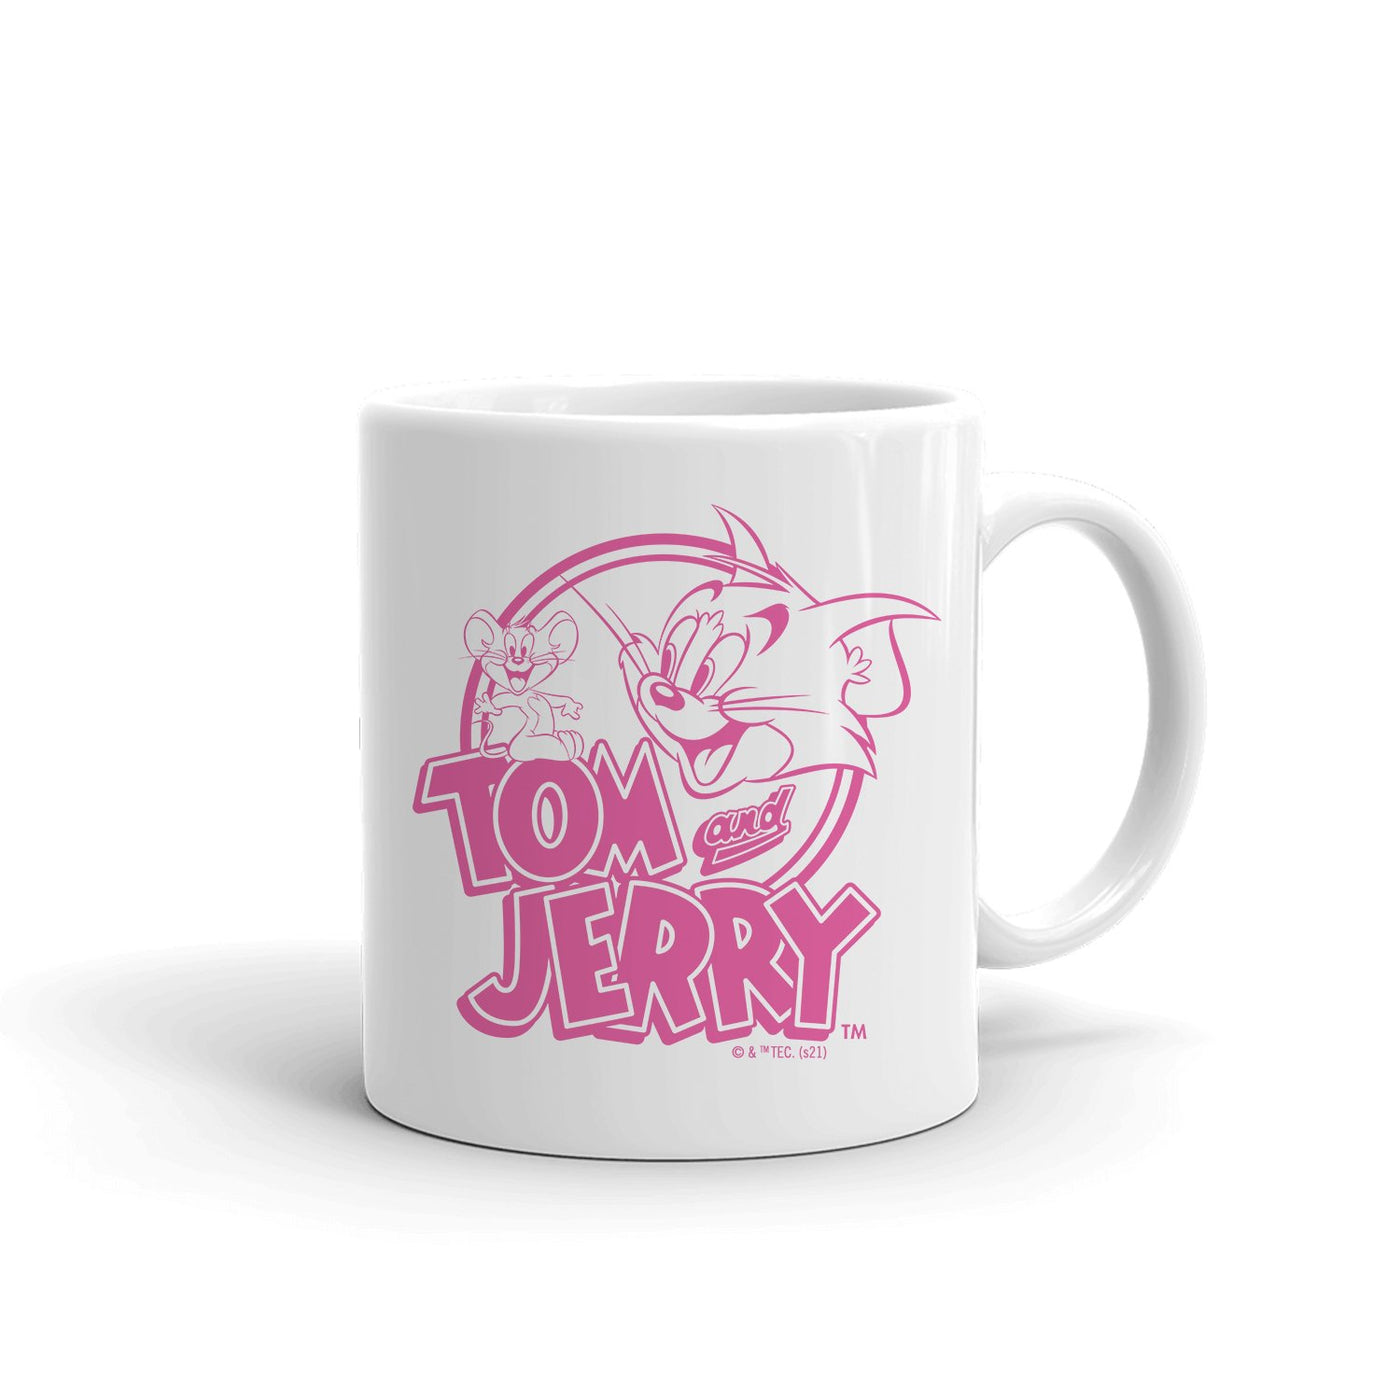 Tom and Jerry "Happy!" White Mug